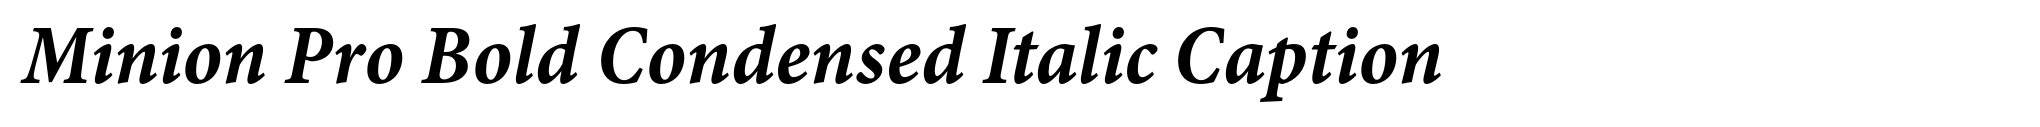 Minion Pro Bold Condensed Italic Caption image